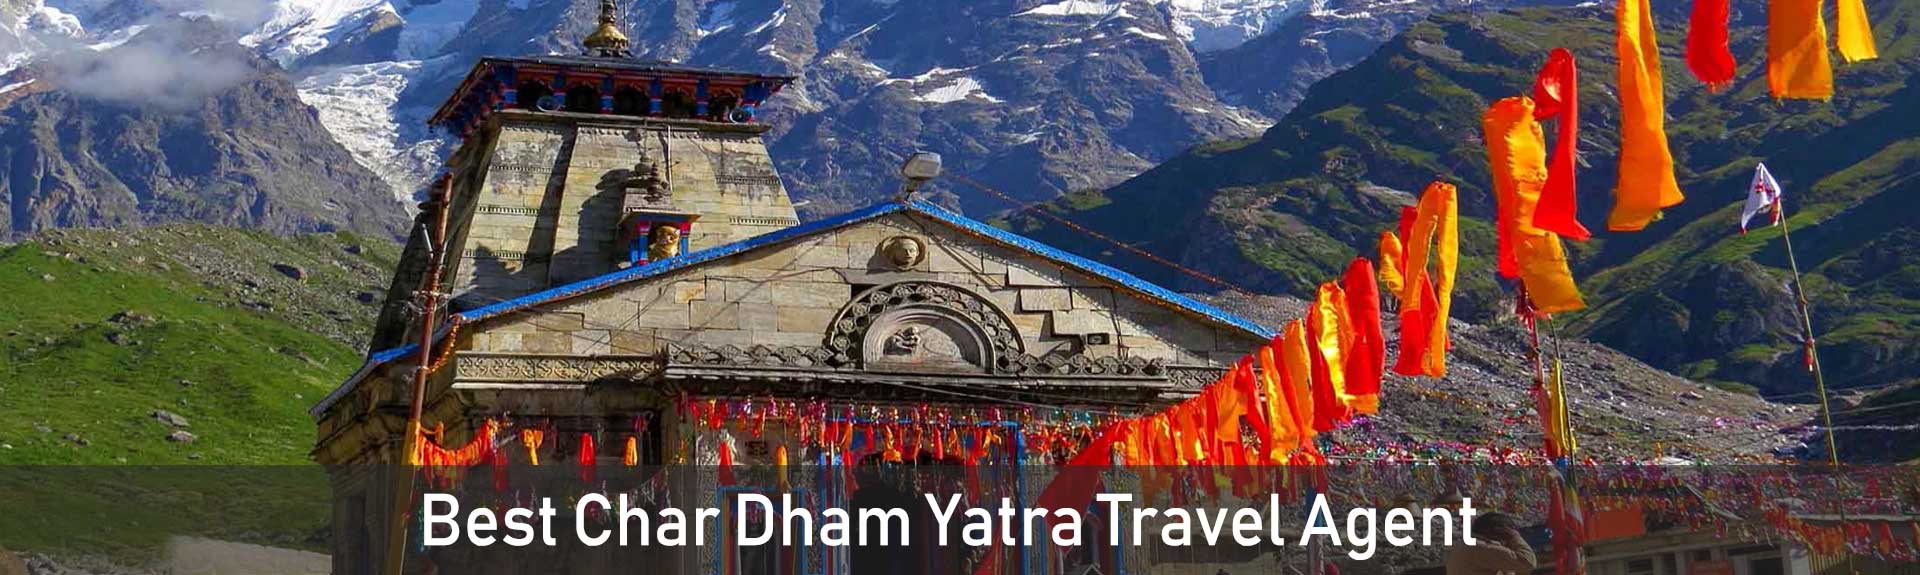 Best Char Dham Yatra Travel Agent